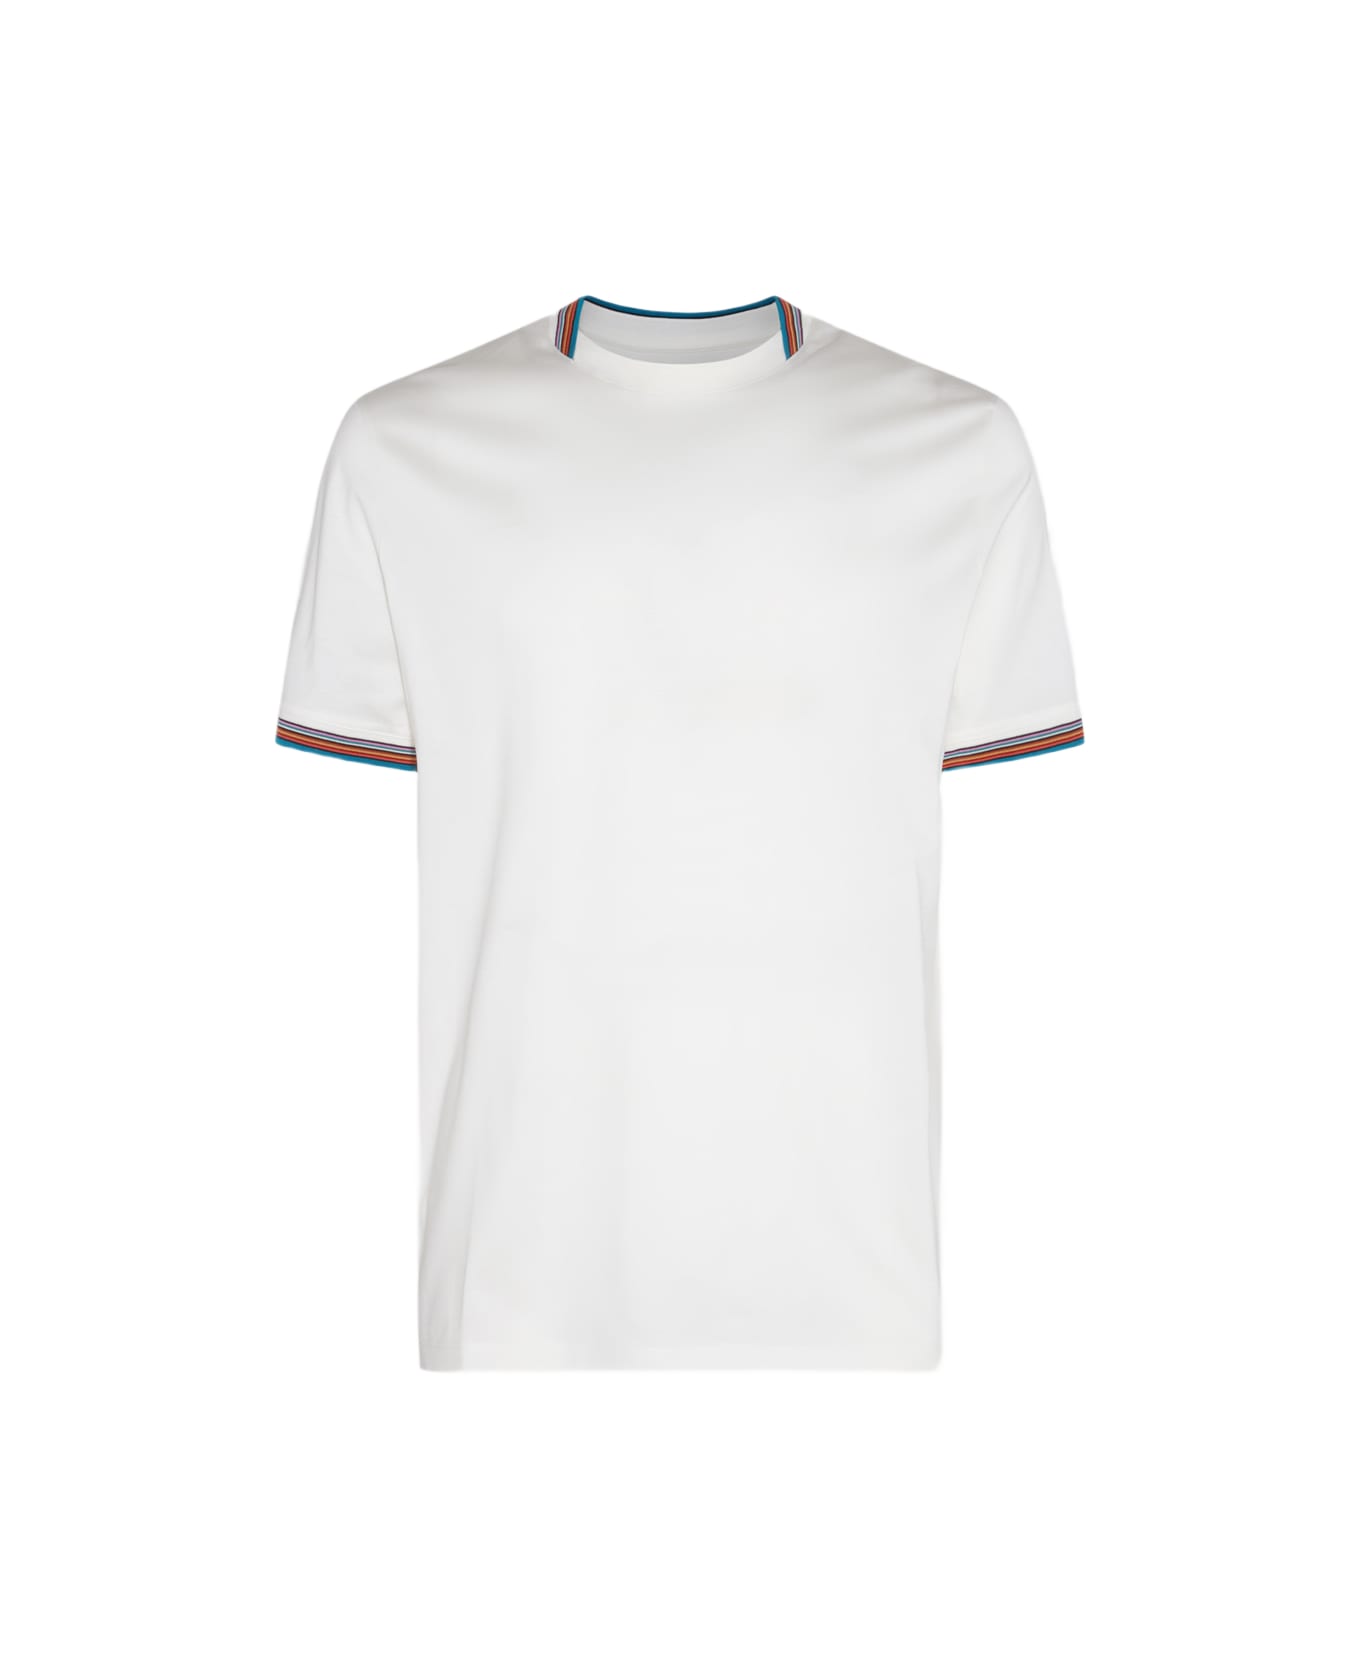 Paul Smith White Multicolour Cotton T-shirt - White